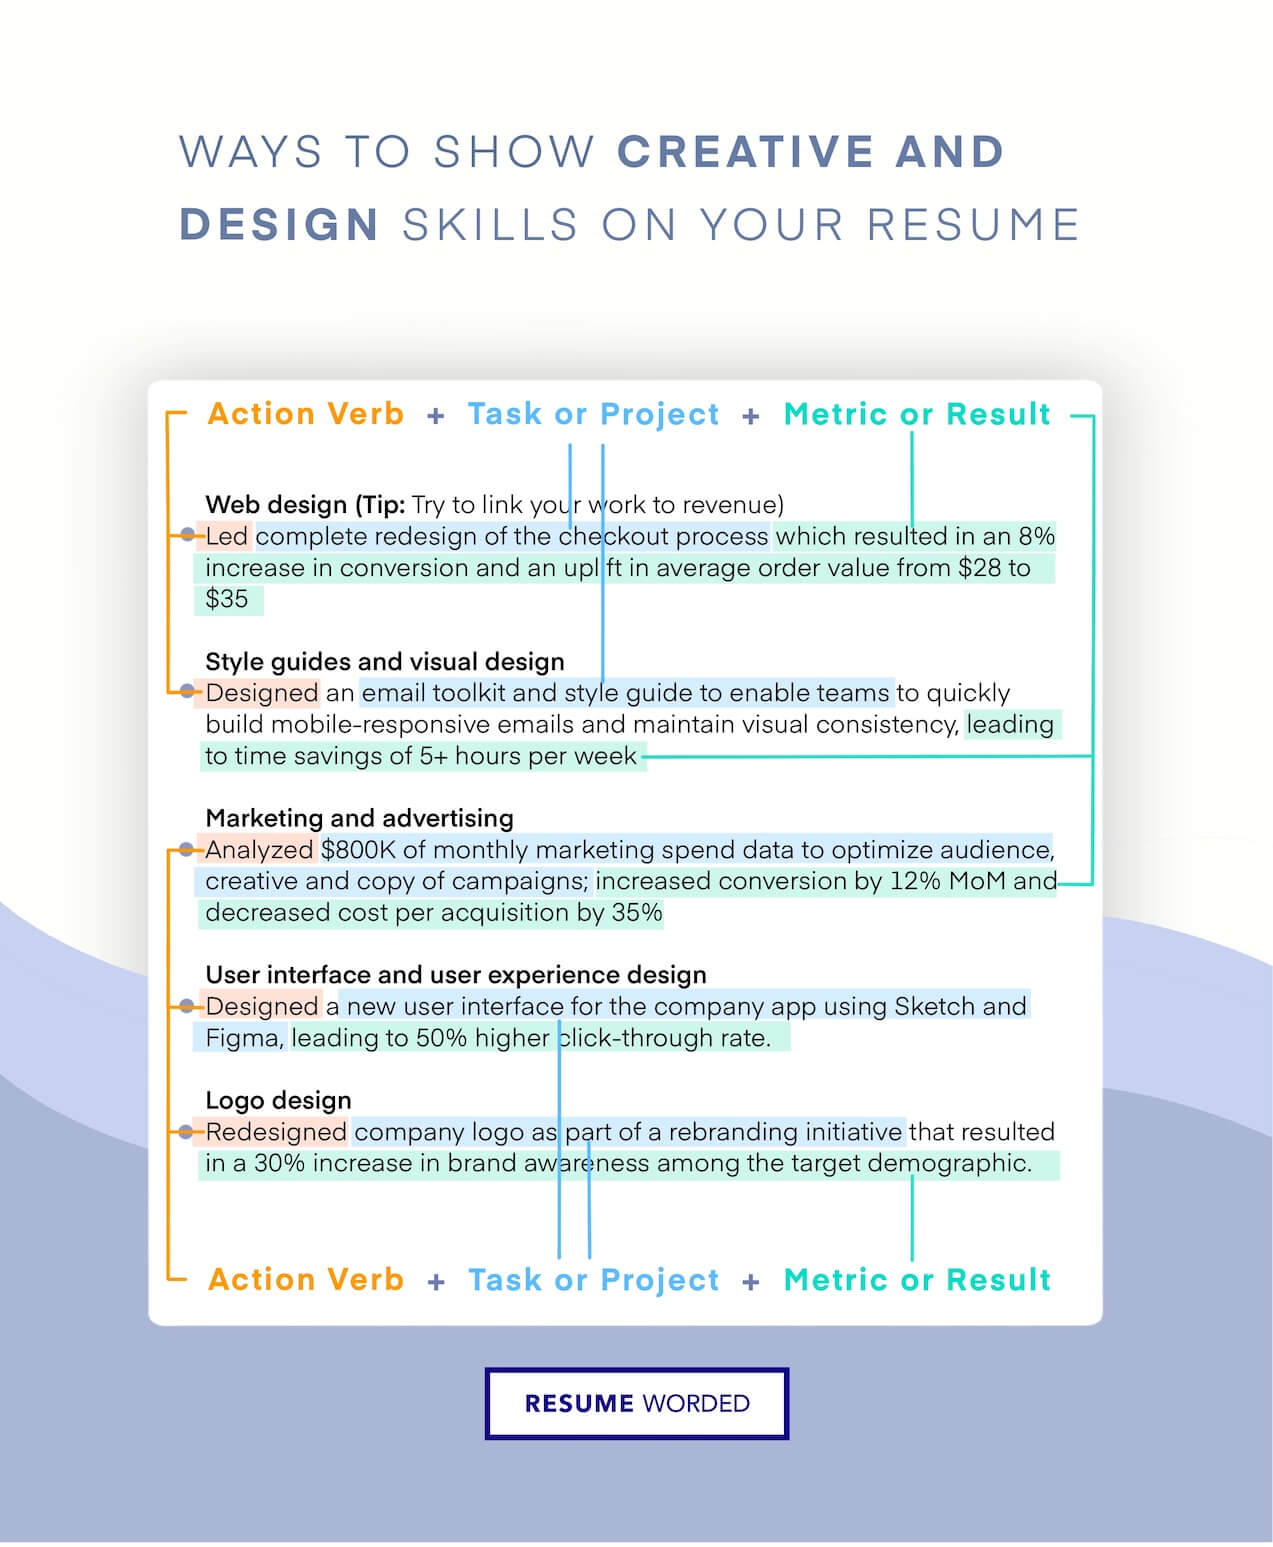 Show your creativity. - Software Development Engineer in Test (SDET) Resume